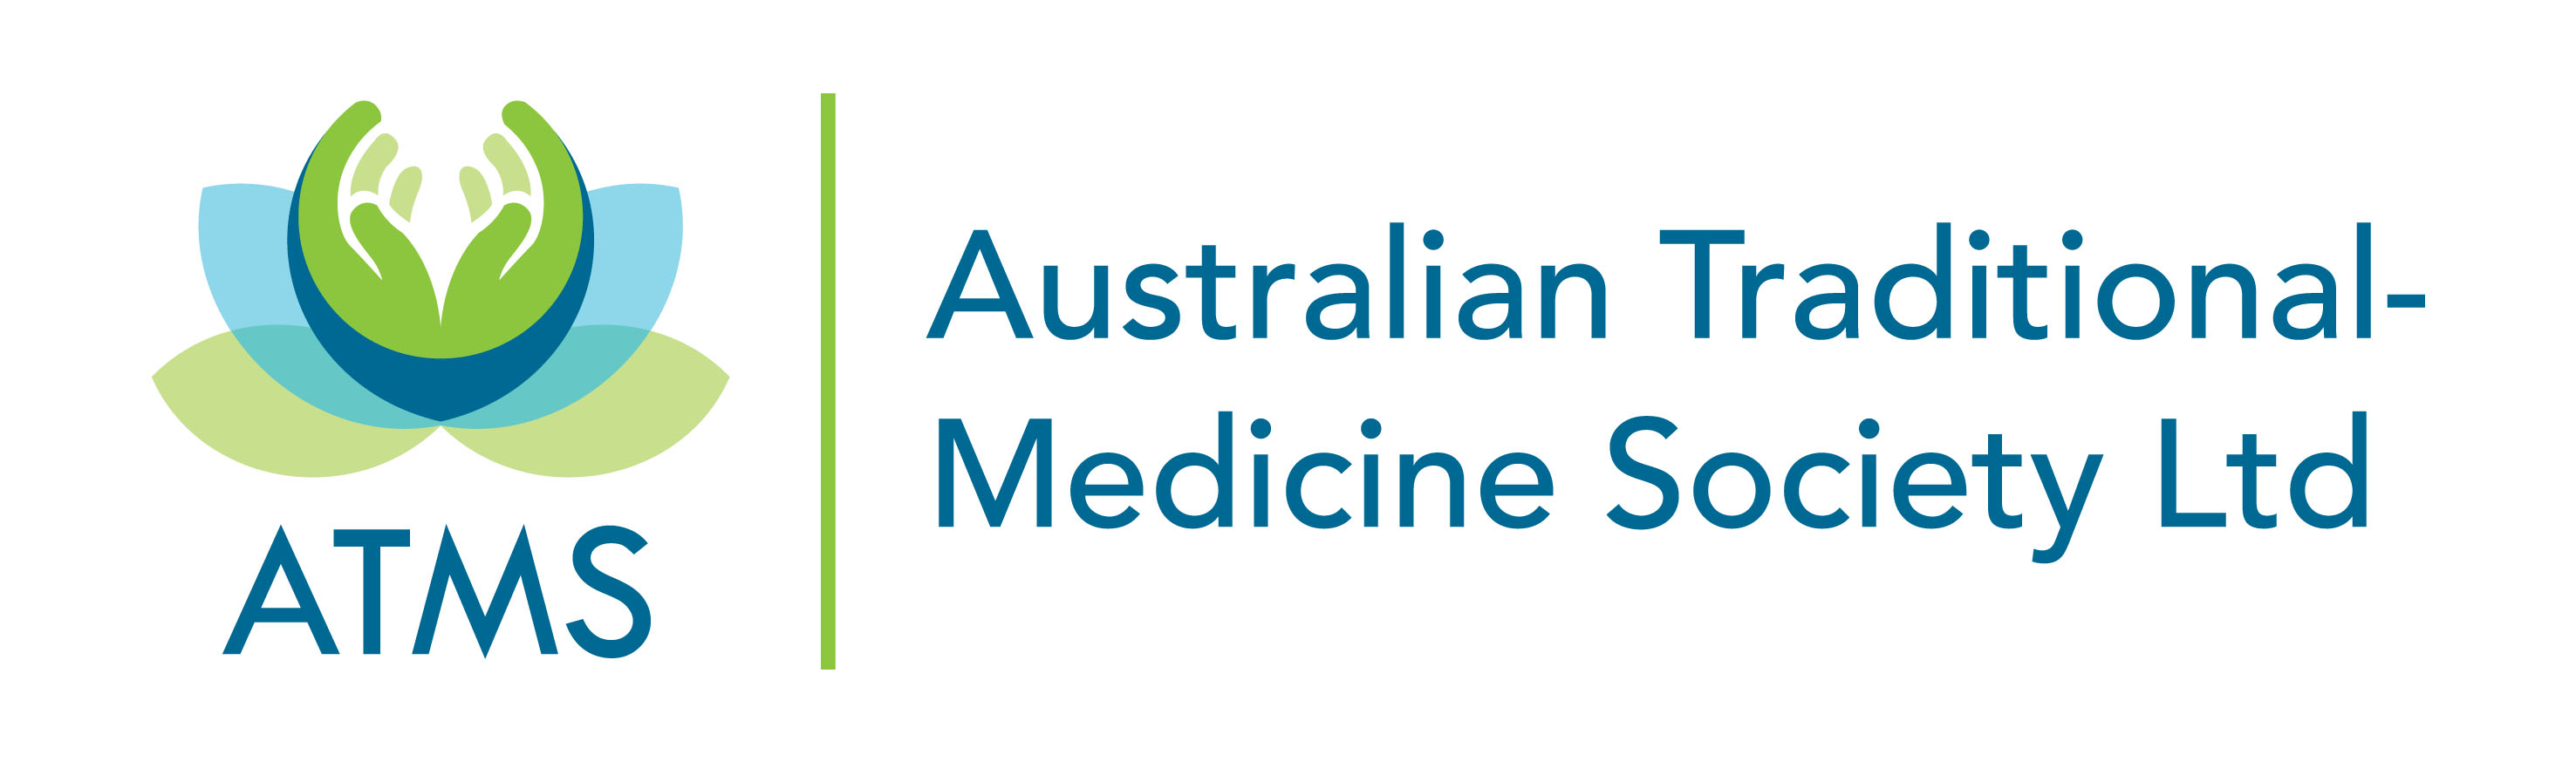 Australian Tradition-Medicine Society Ltd